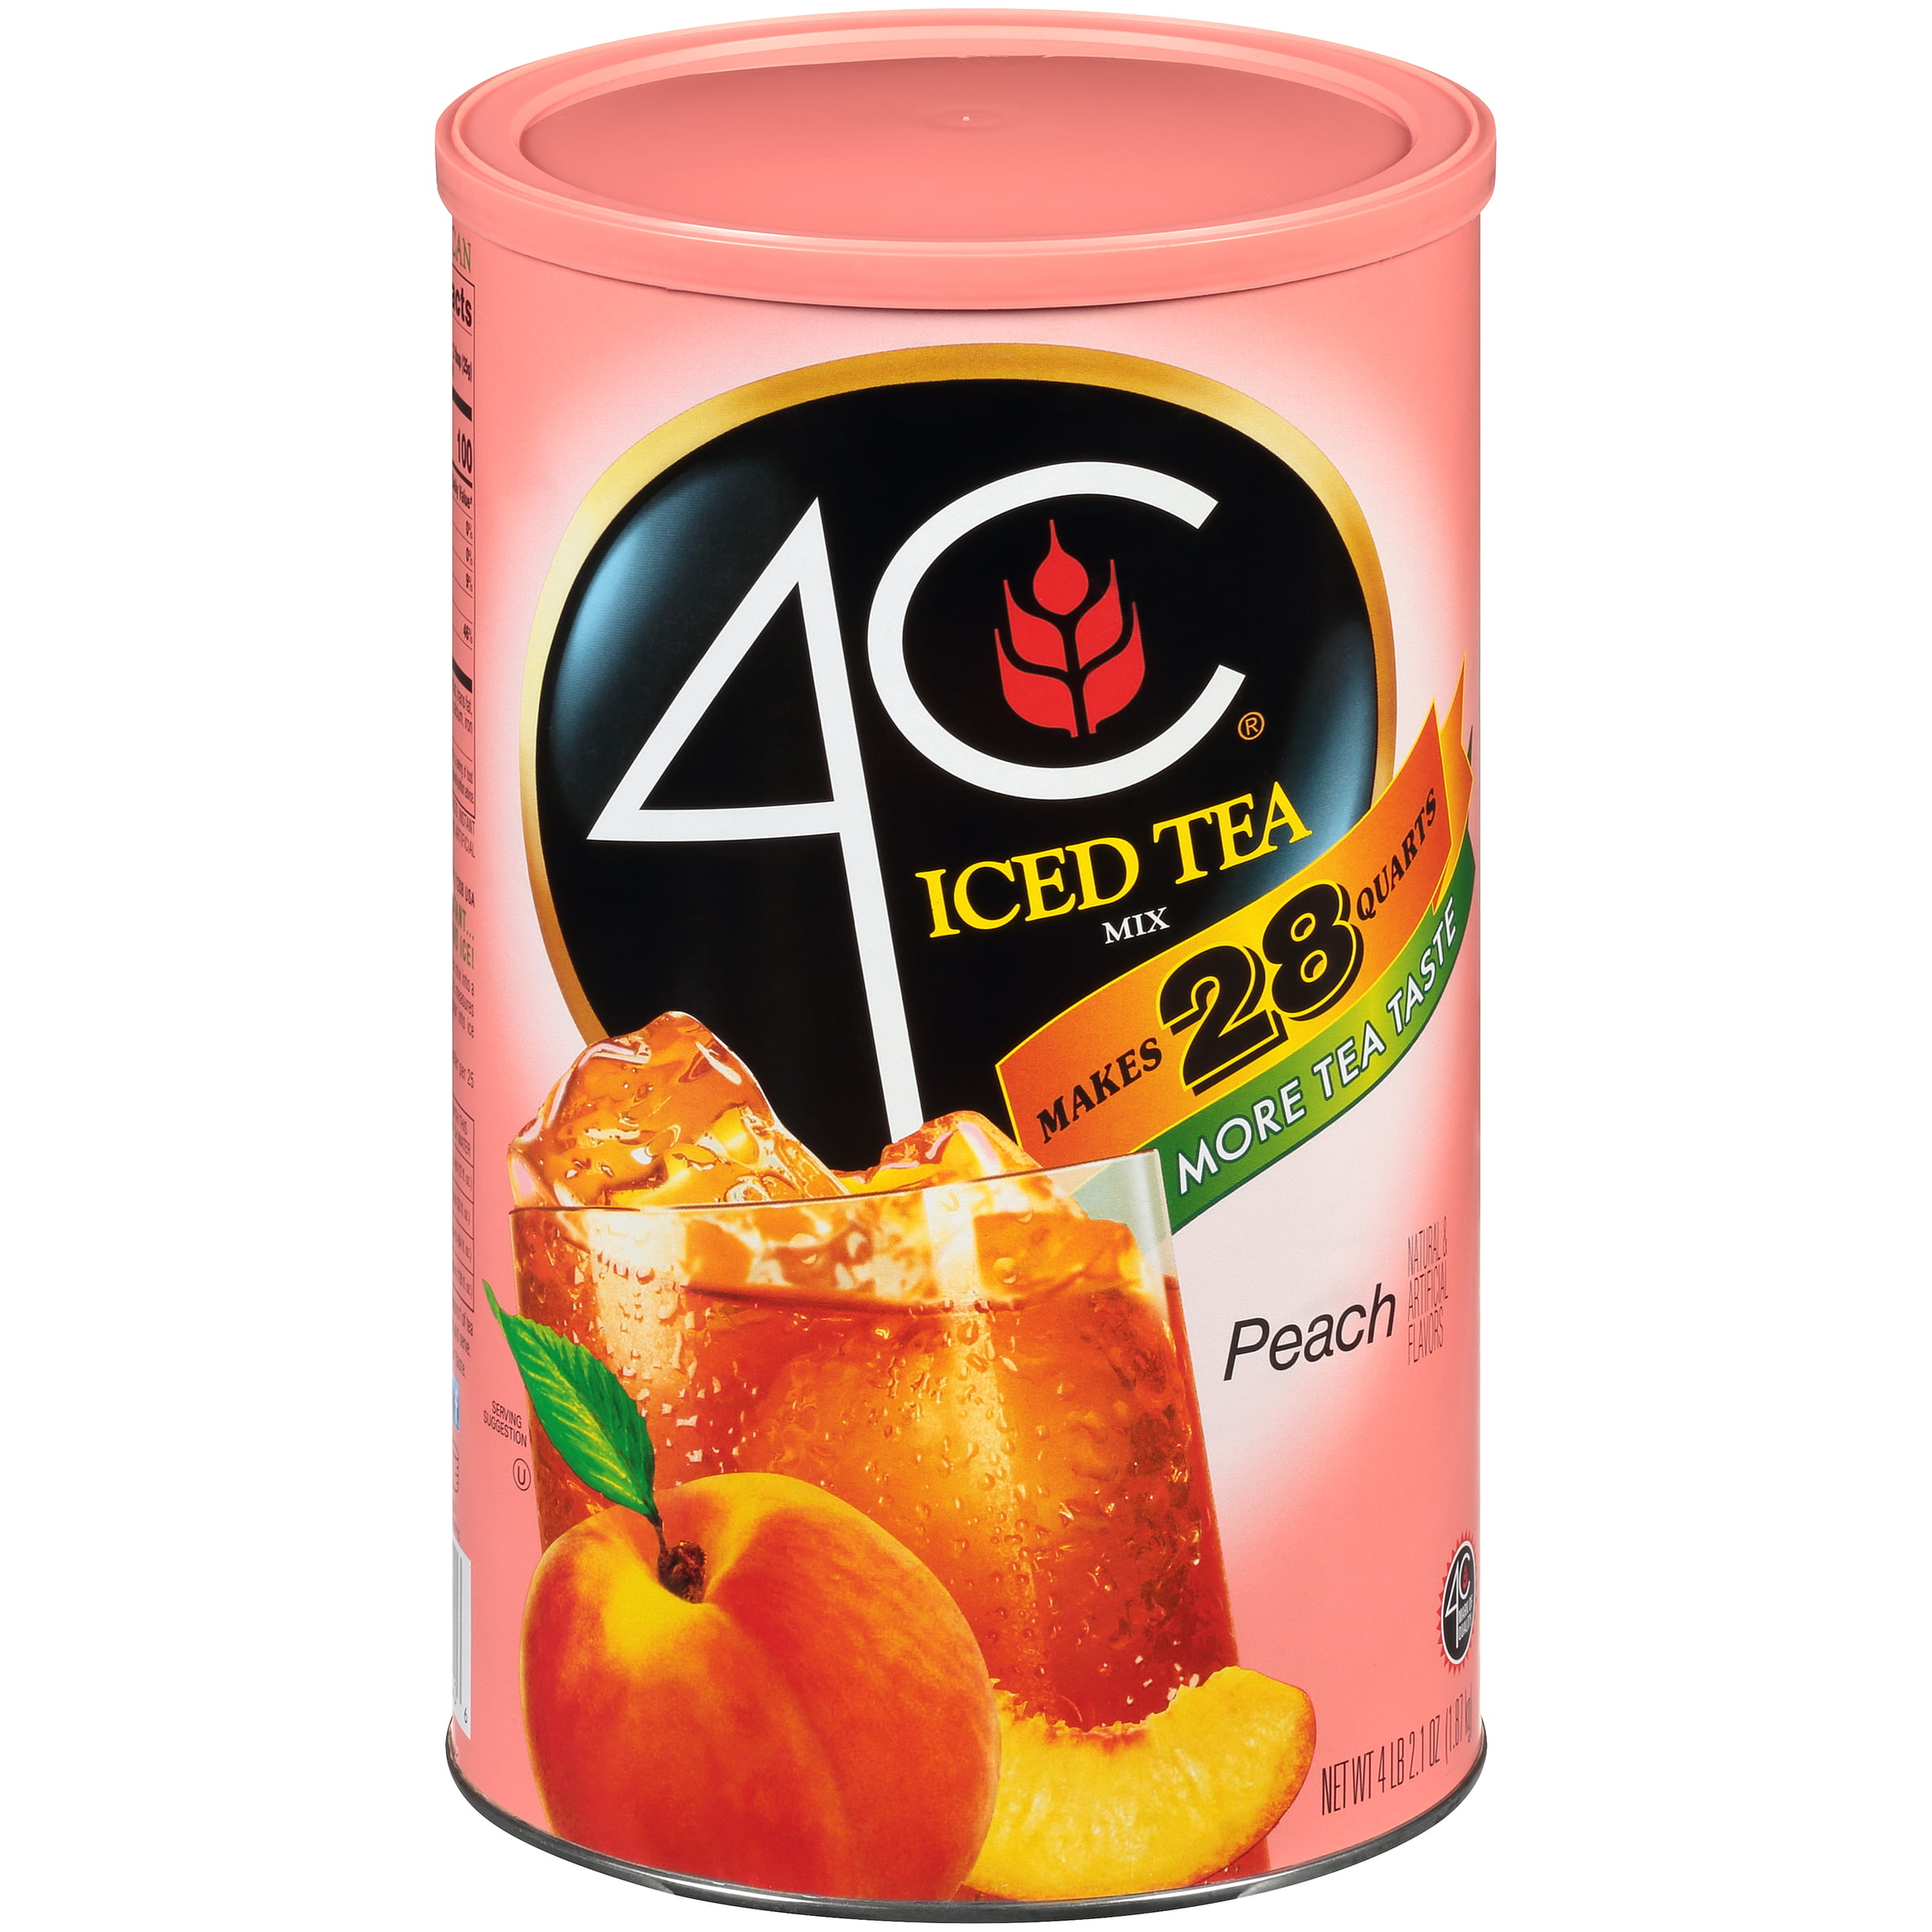 Айс пич. Peach Ice Tea. Dilmah Peach Ice Tea. Frutea Ice Tea Peach flavor. Long Peach Ice Tea.